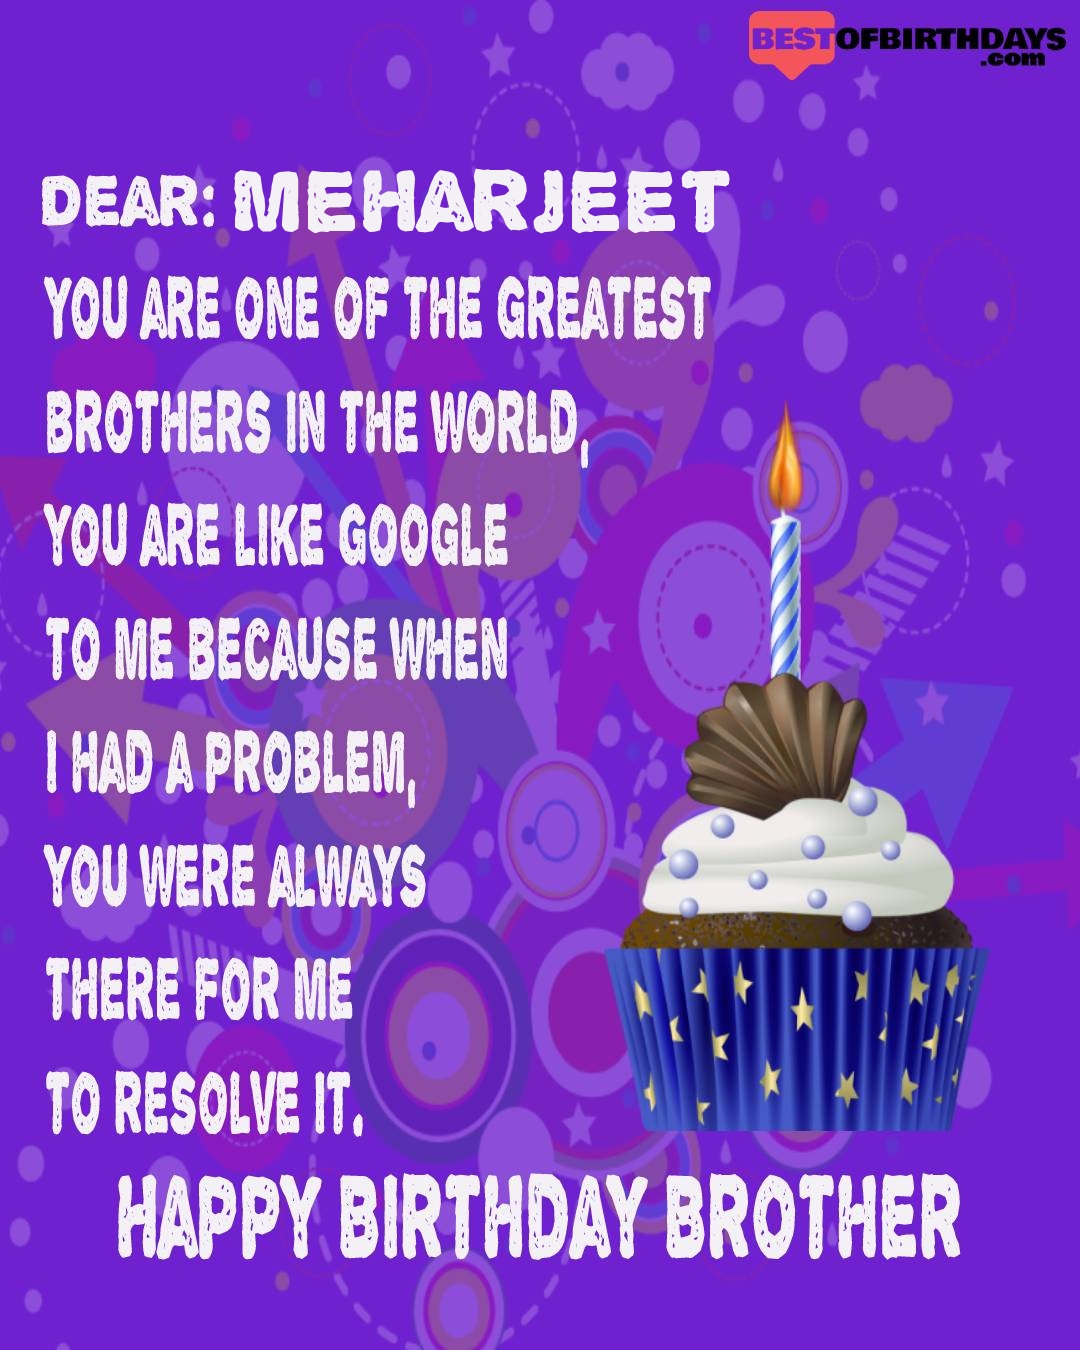 Happy birthday meharjeet bhai brother bro